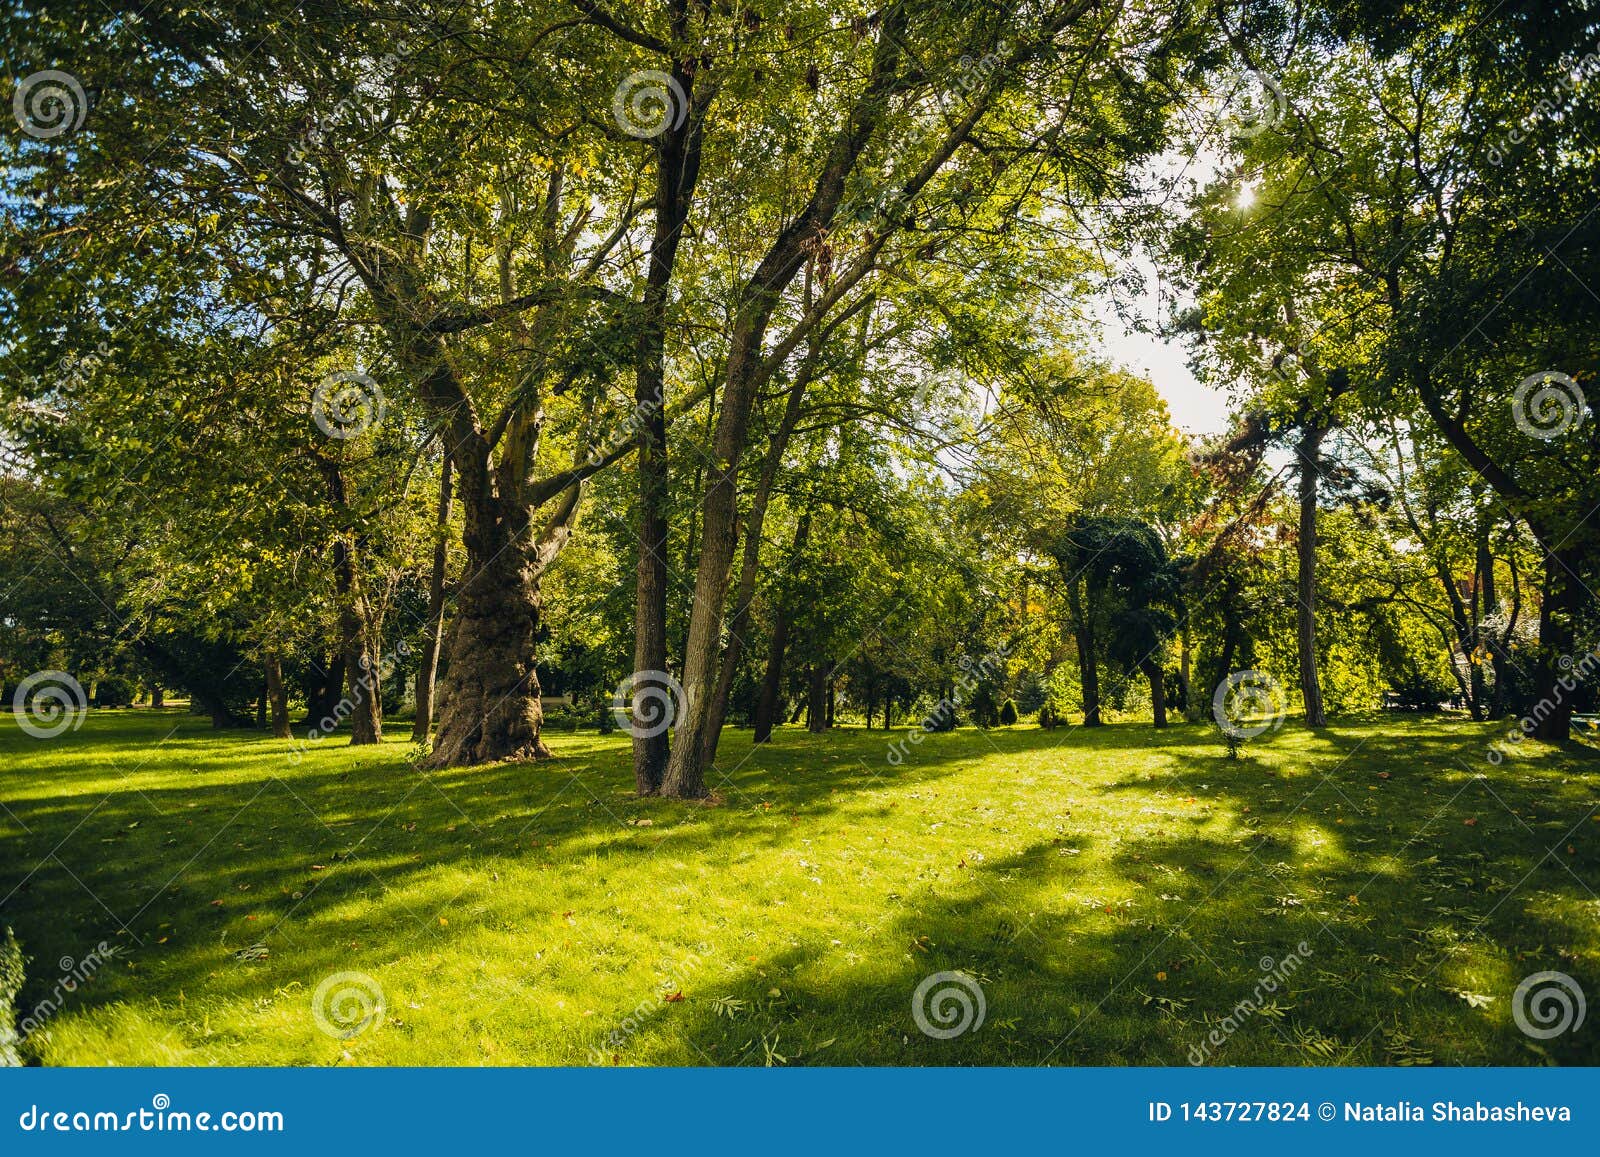 Beautiful Park Scene in Public Park with Green Grass Field, Green Tree ...